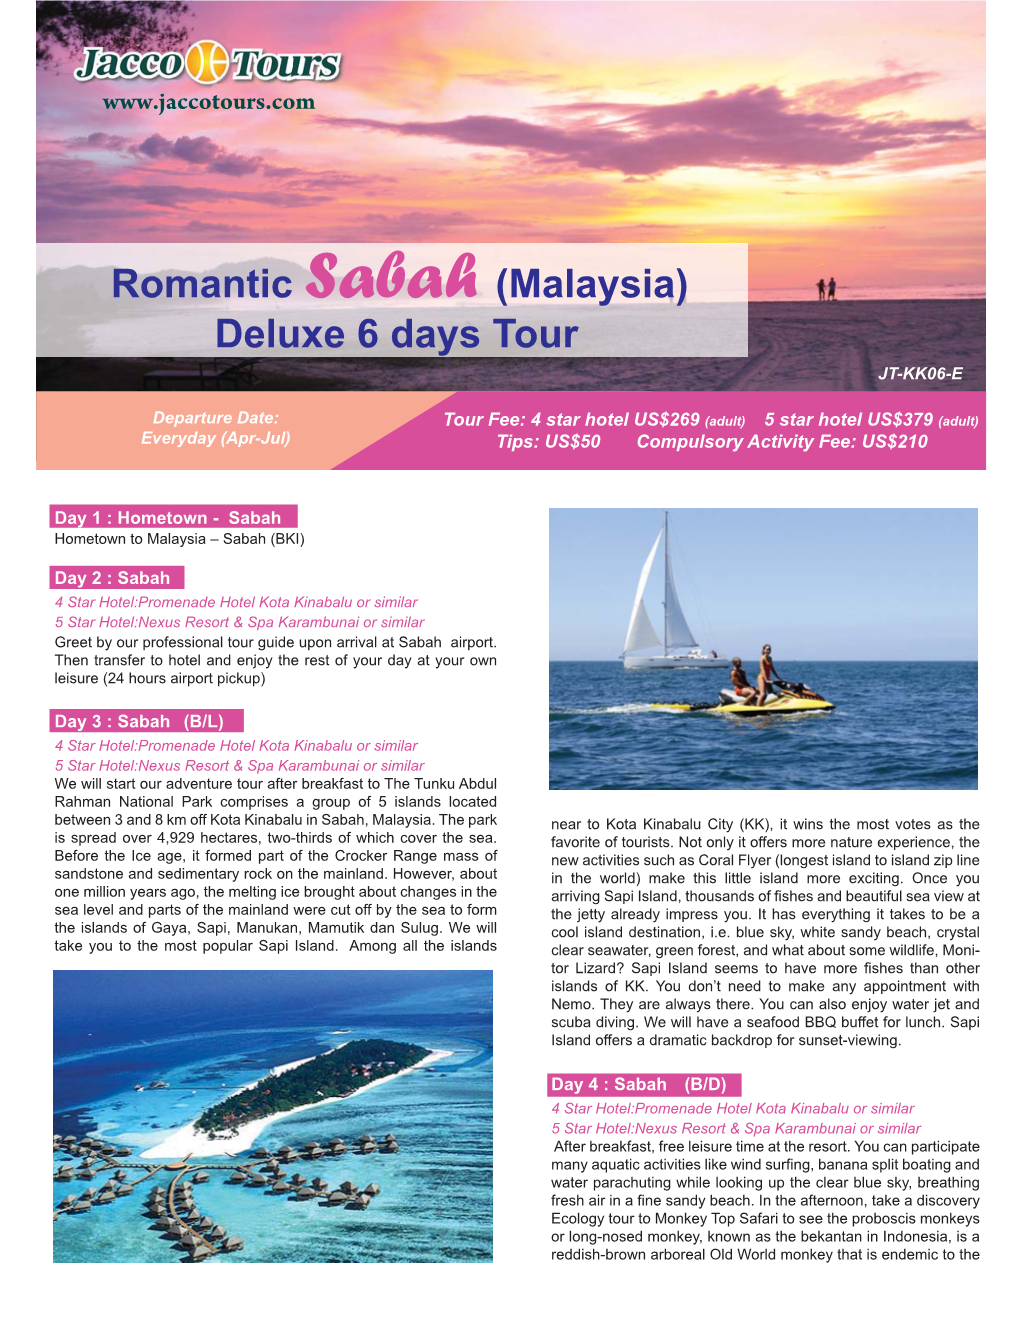 Romantic Sabah (Malaysia) Deluxe 6 Days Tour JT-KK06-E